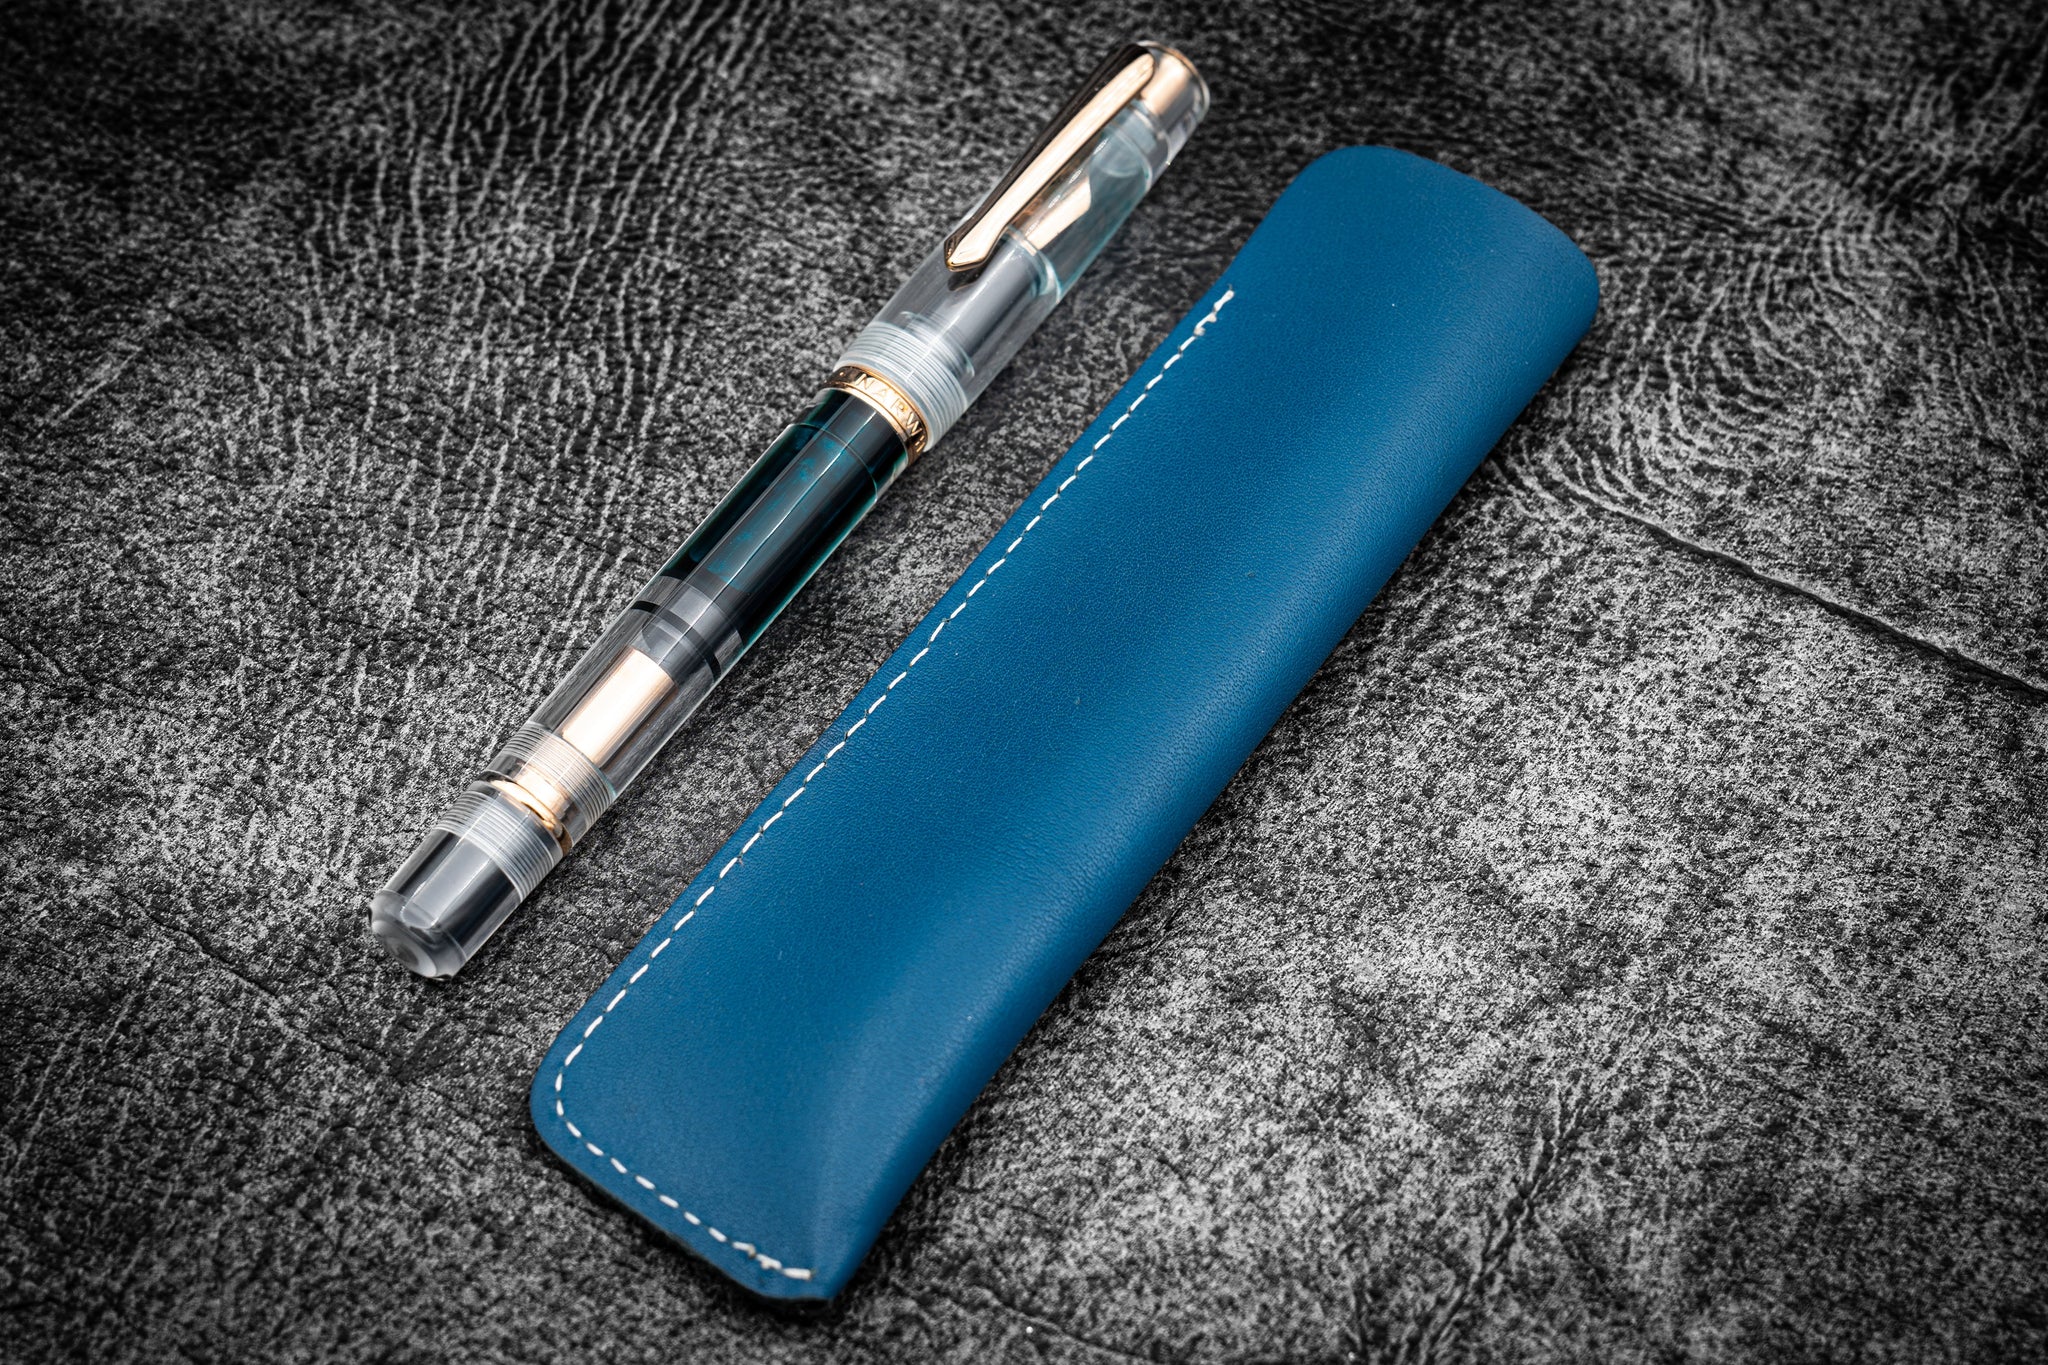  Tofficu 3pcs Soft Leather Pencil Case Fountain Pen